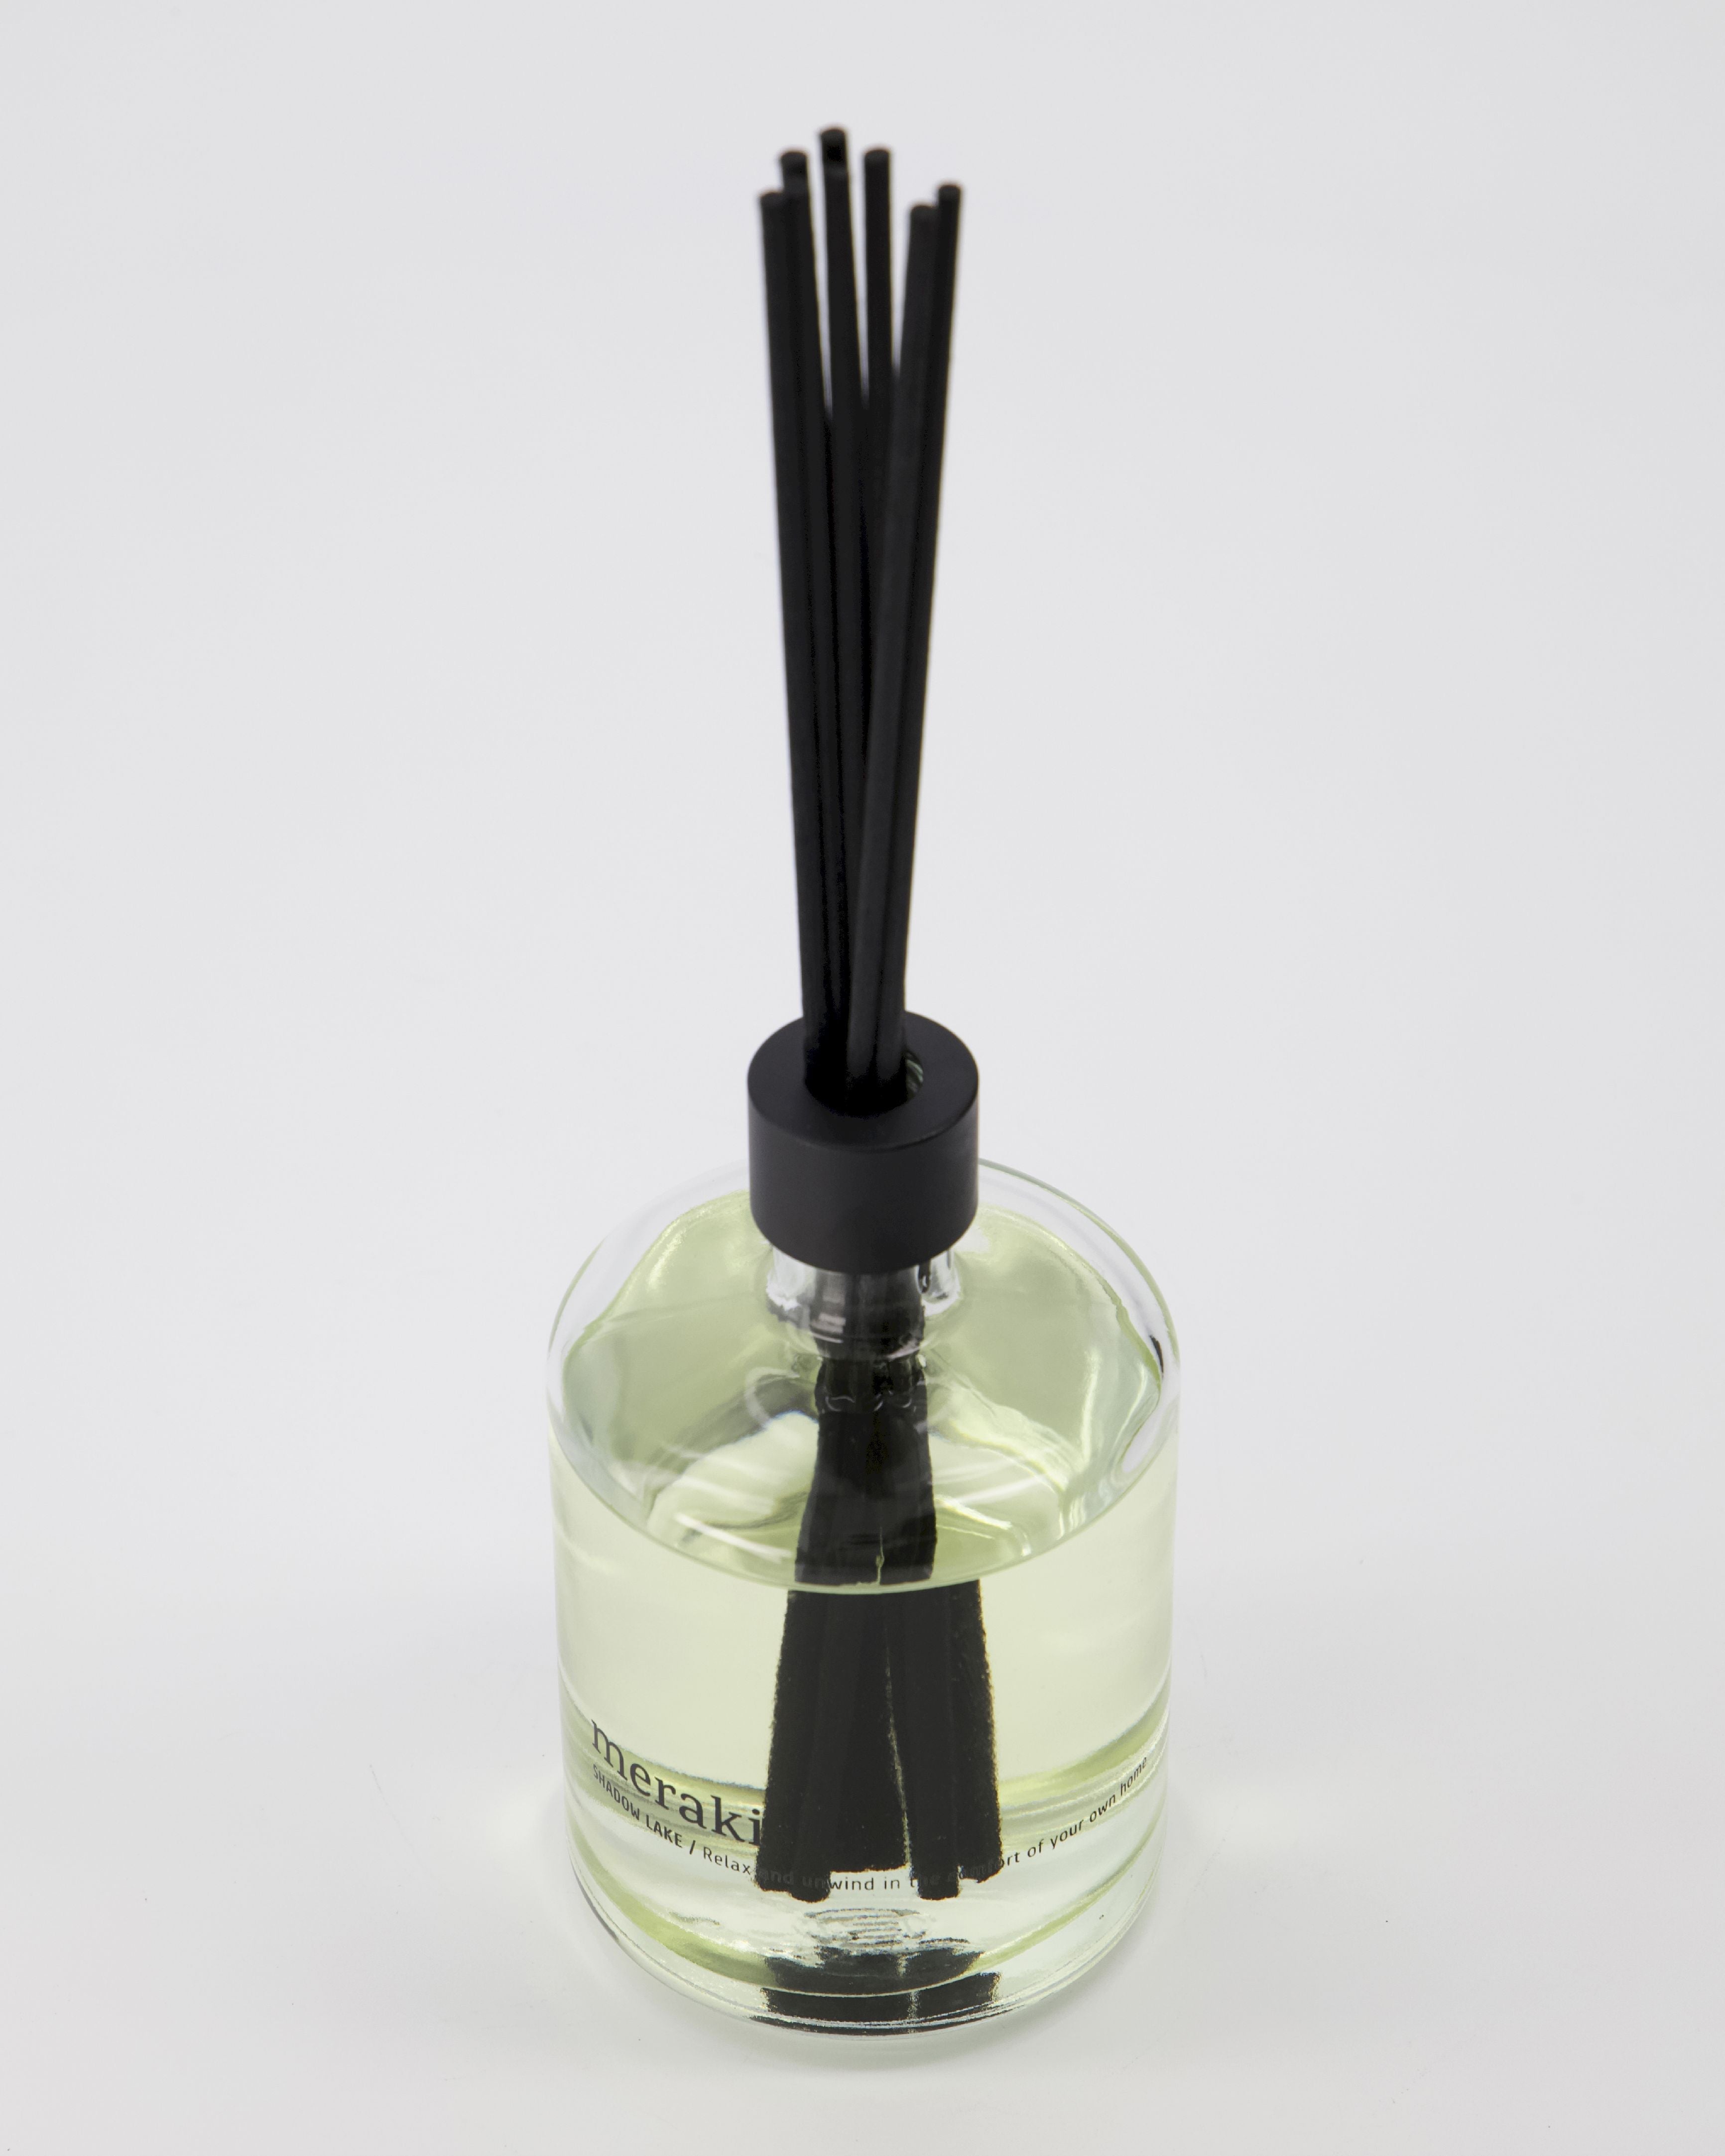 Fragrance Meraki 180 ml, Shadow Lake